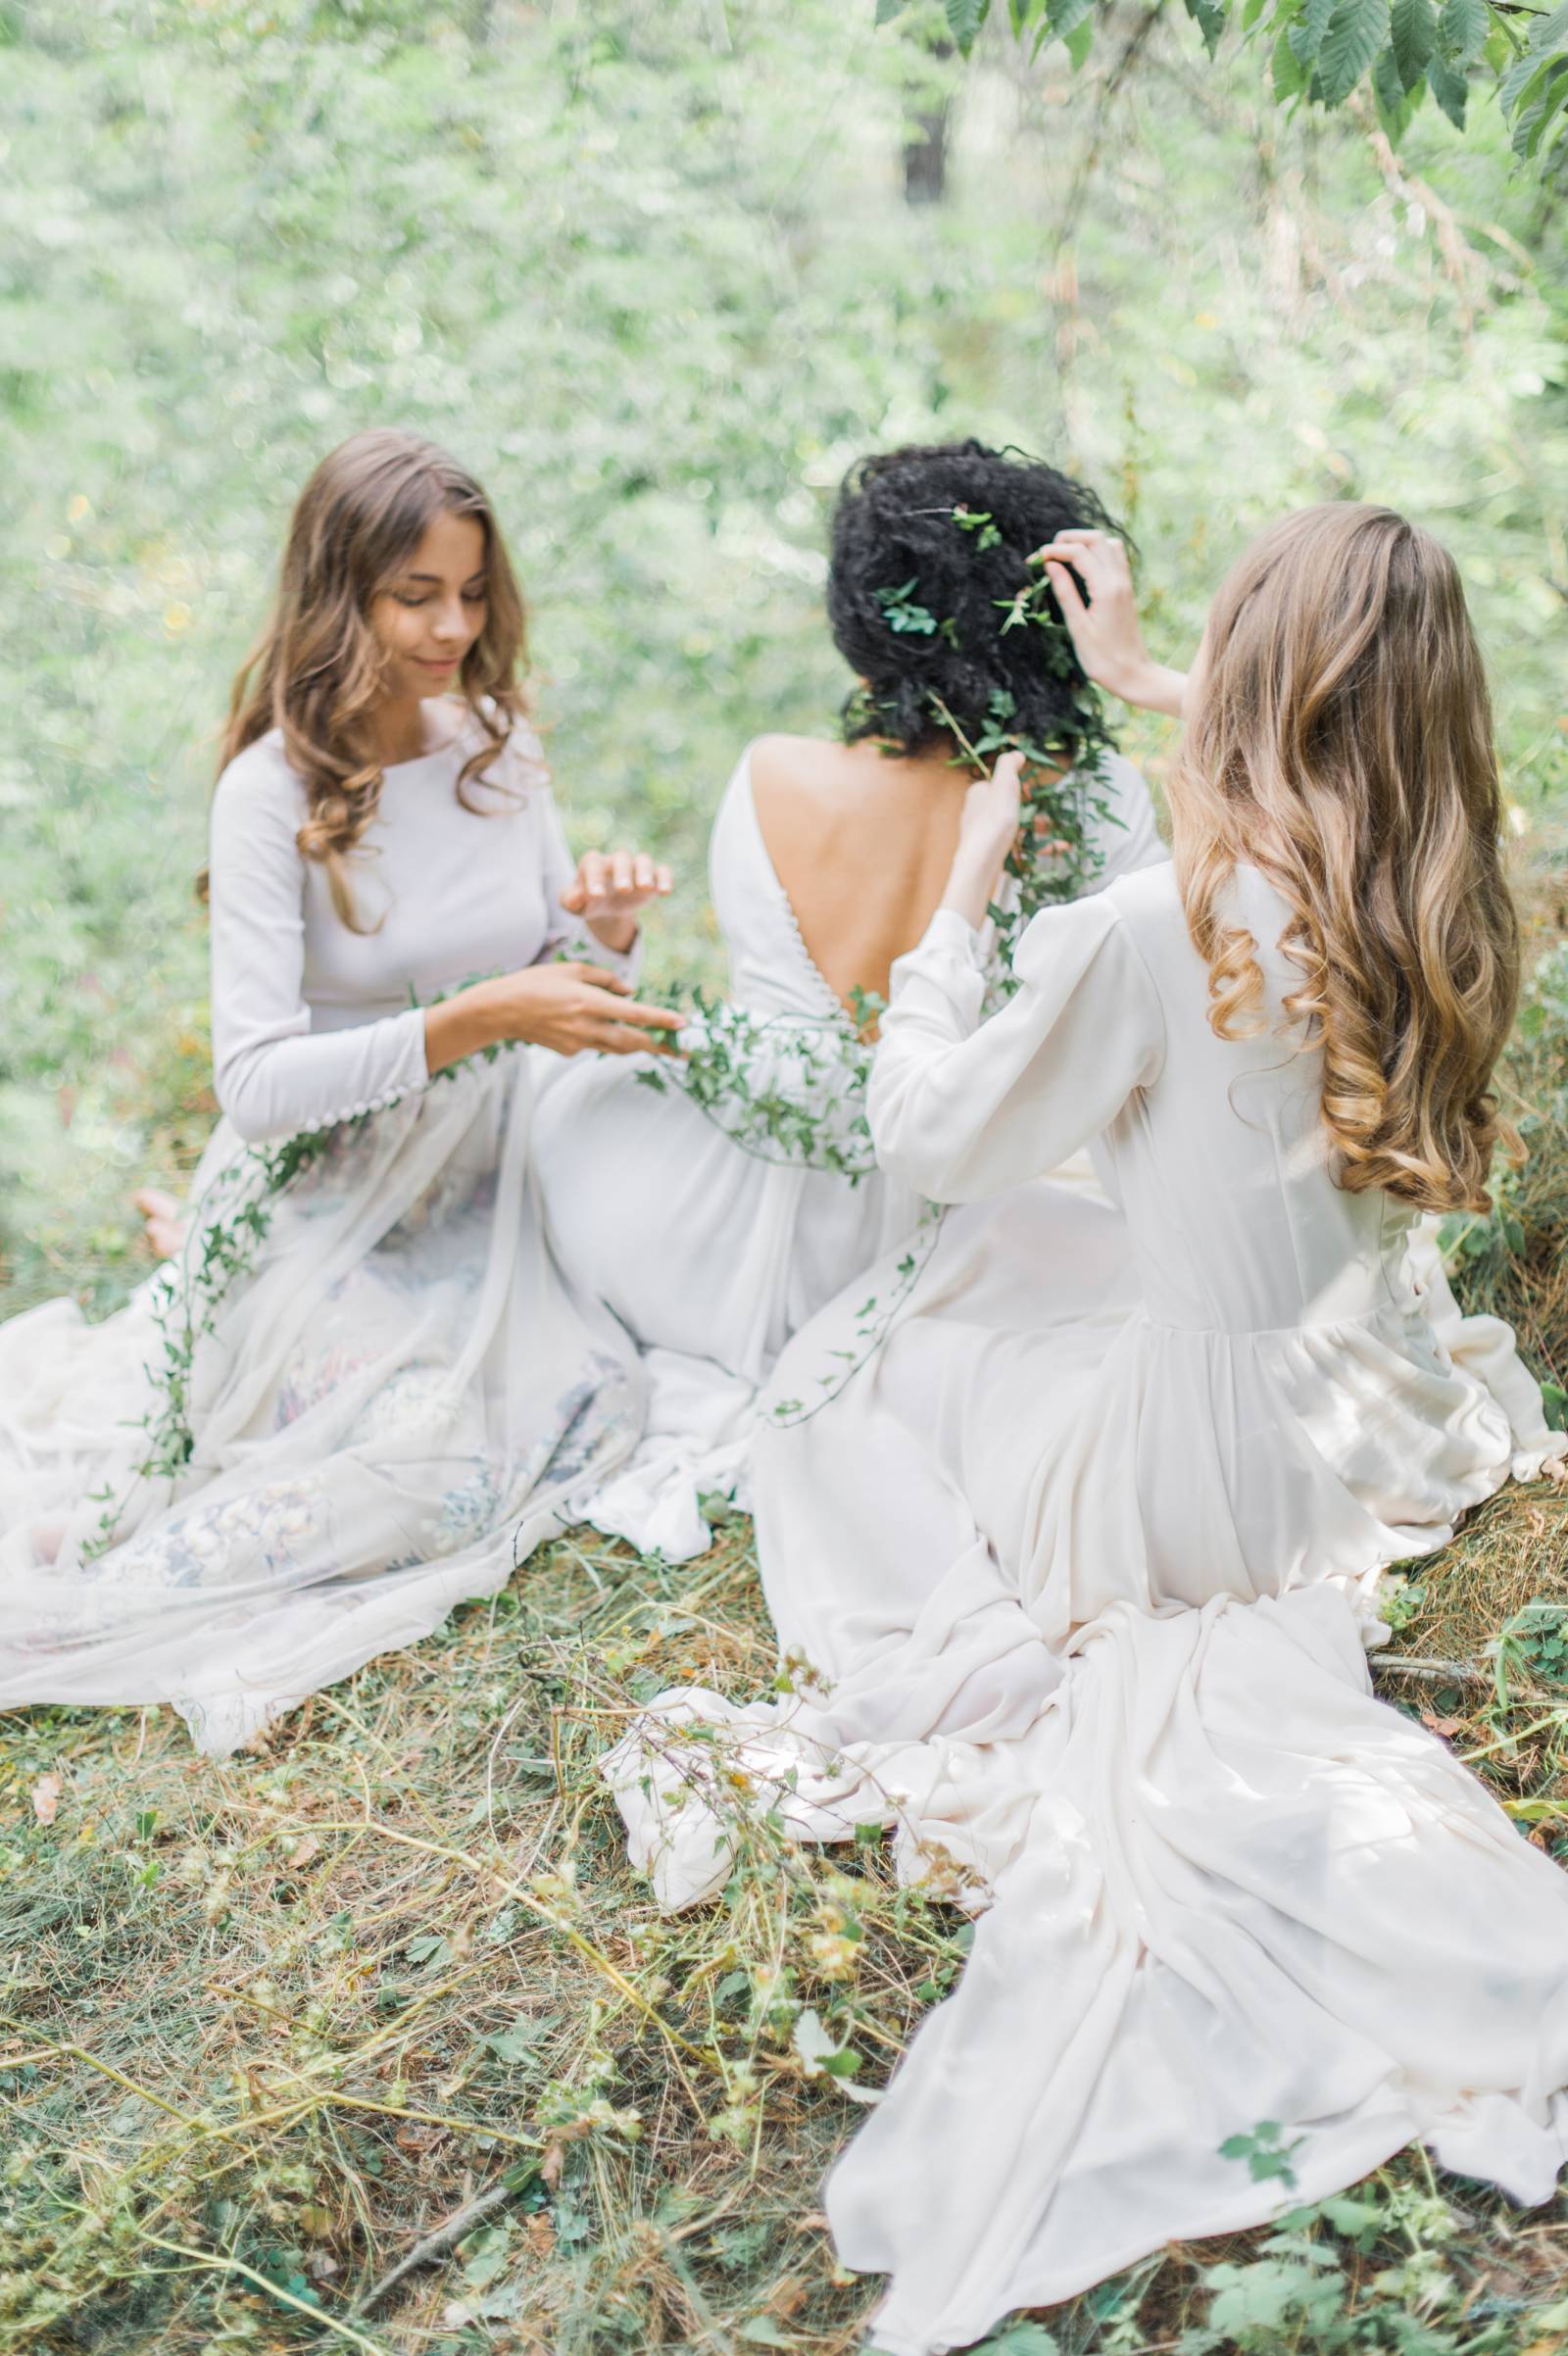 Ukrainian forest bridal shoot inspired by Mother Nature | Ukraine ...